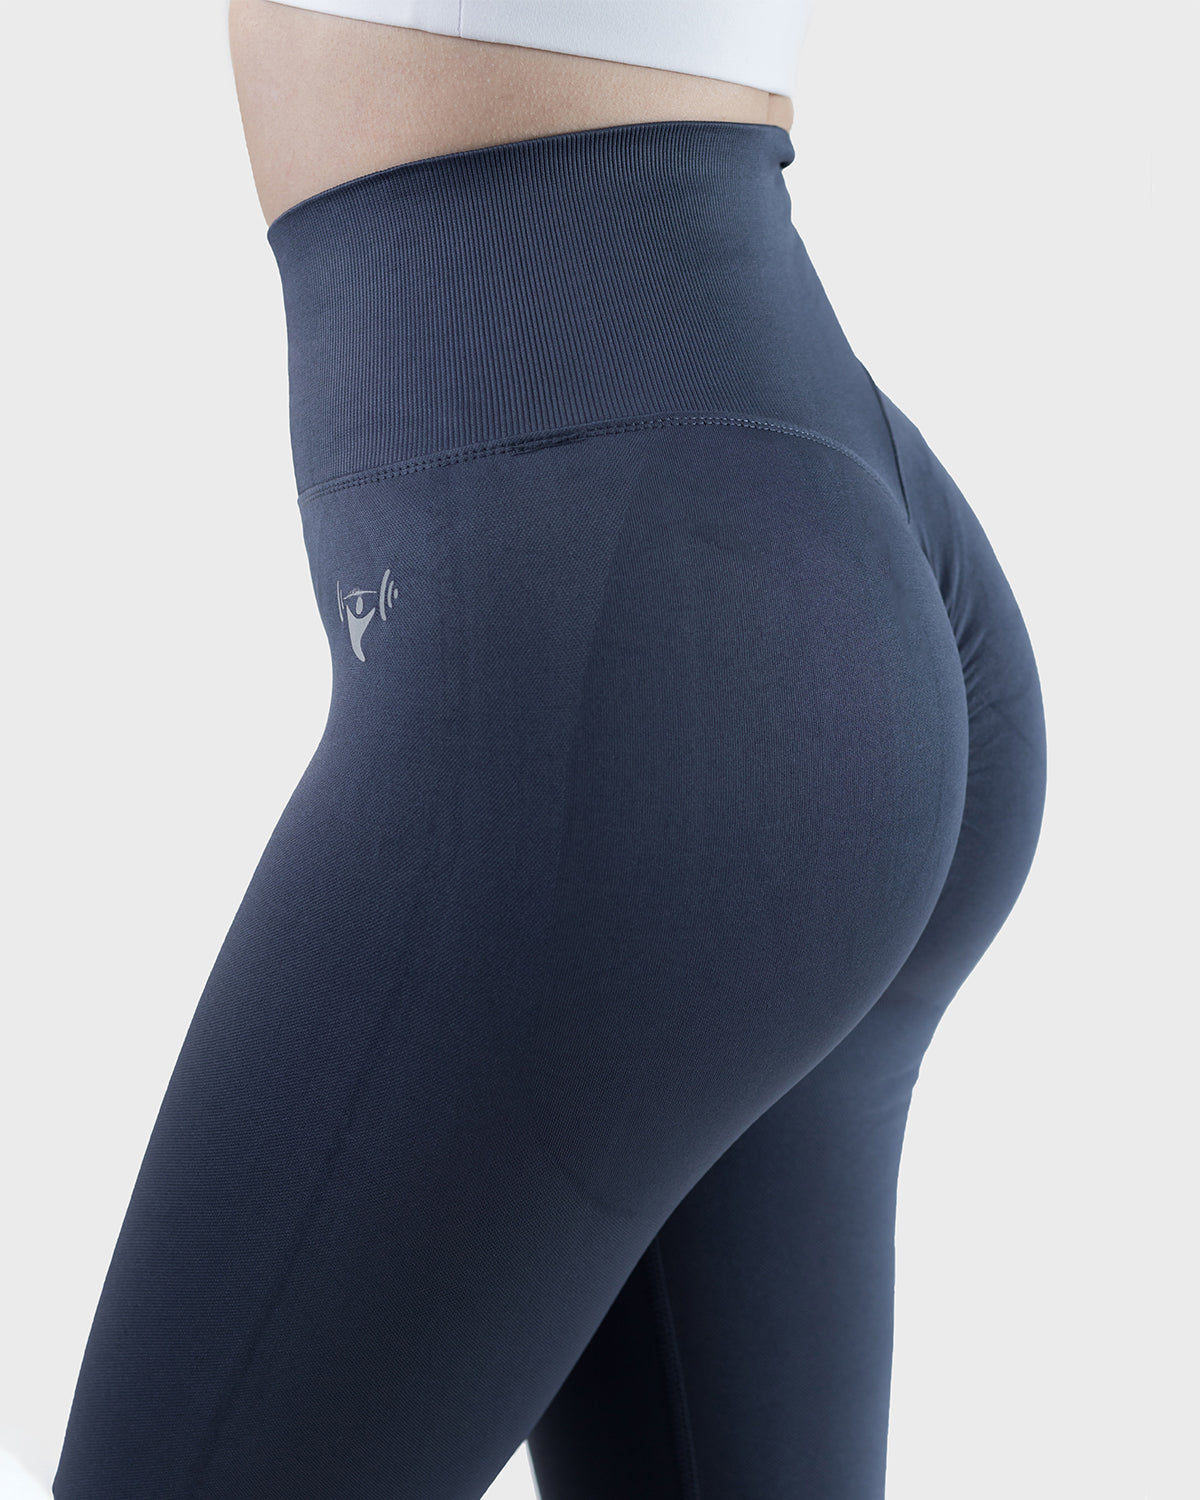 Love Israel Women's Yoga Pants High Waist Tummy Control Workout Leggings  Biker Pants